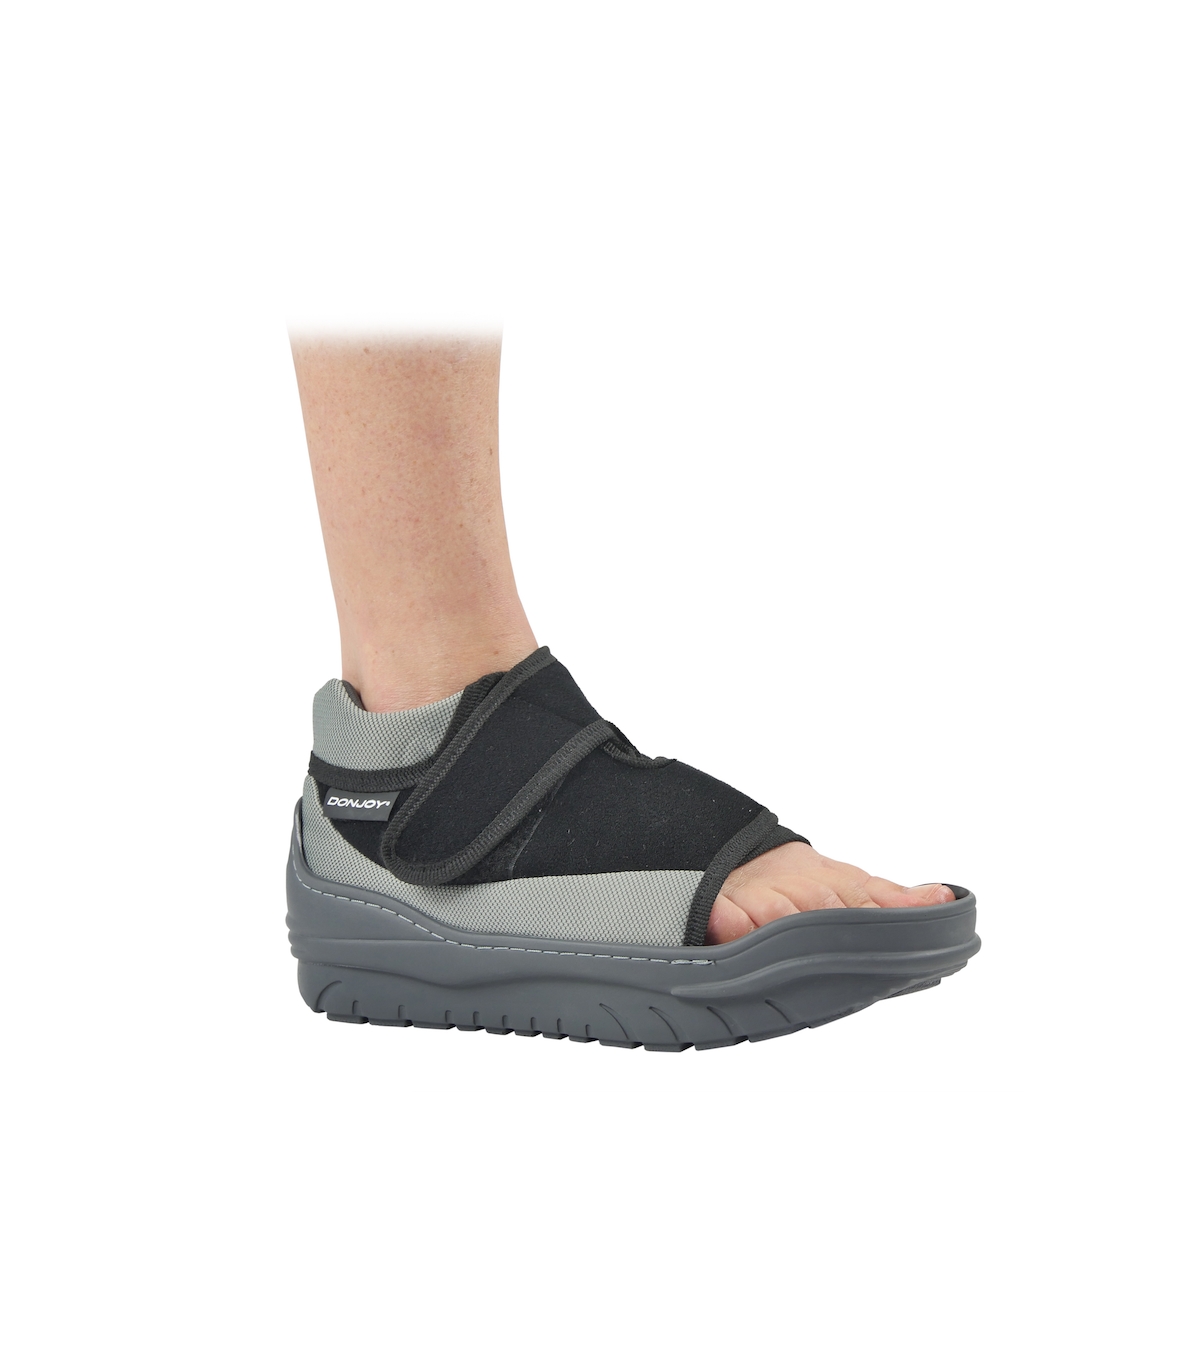 Chaussures orthopédiques homme confortable Zuodi – MODACHIC